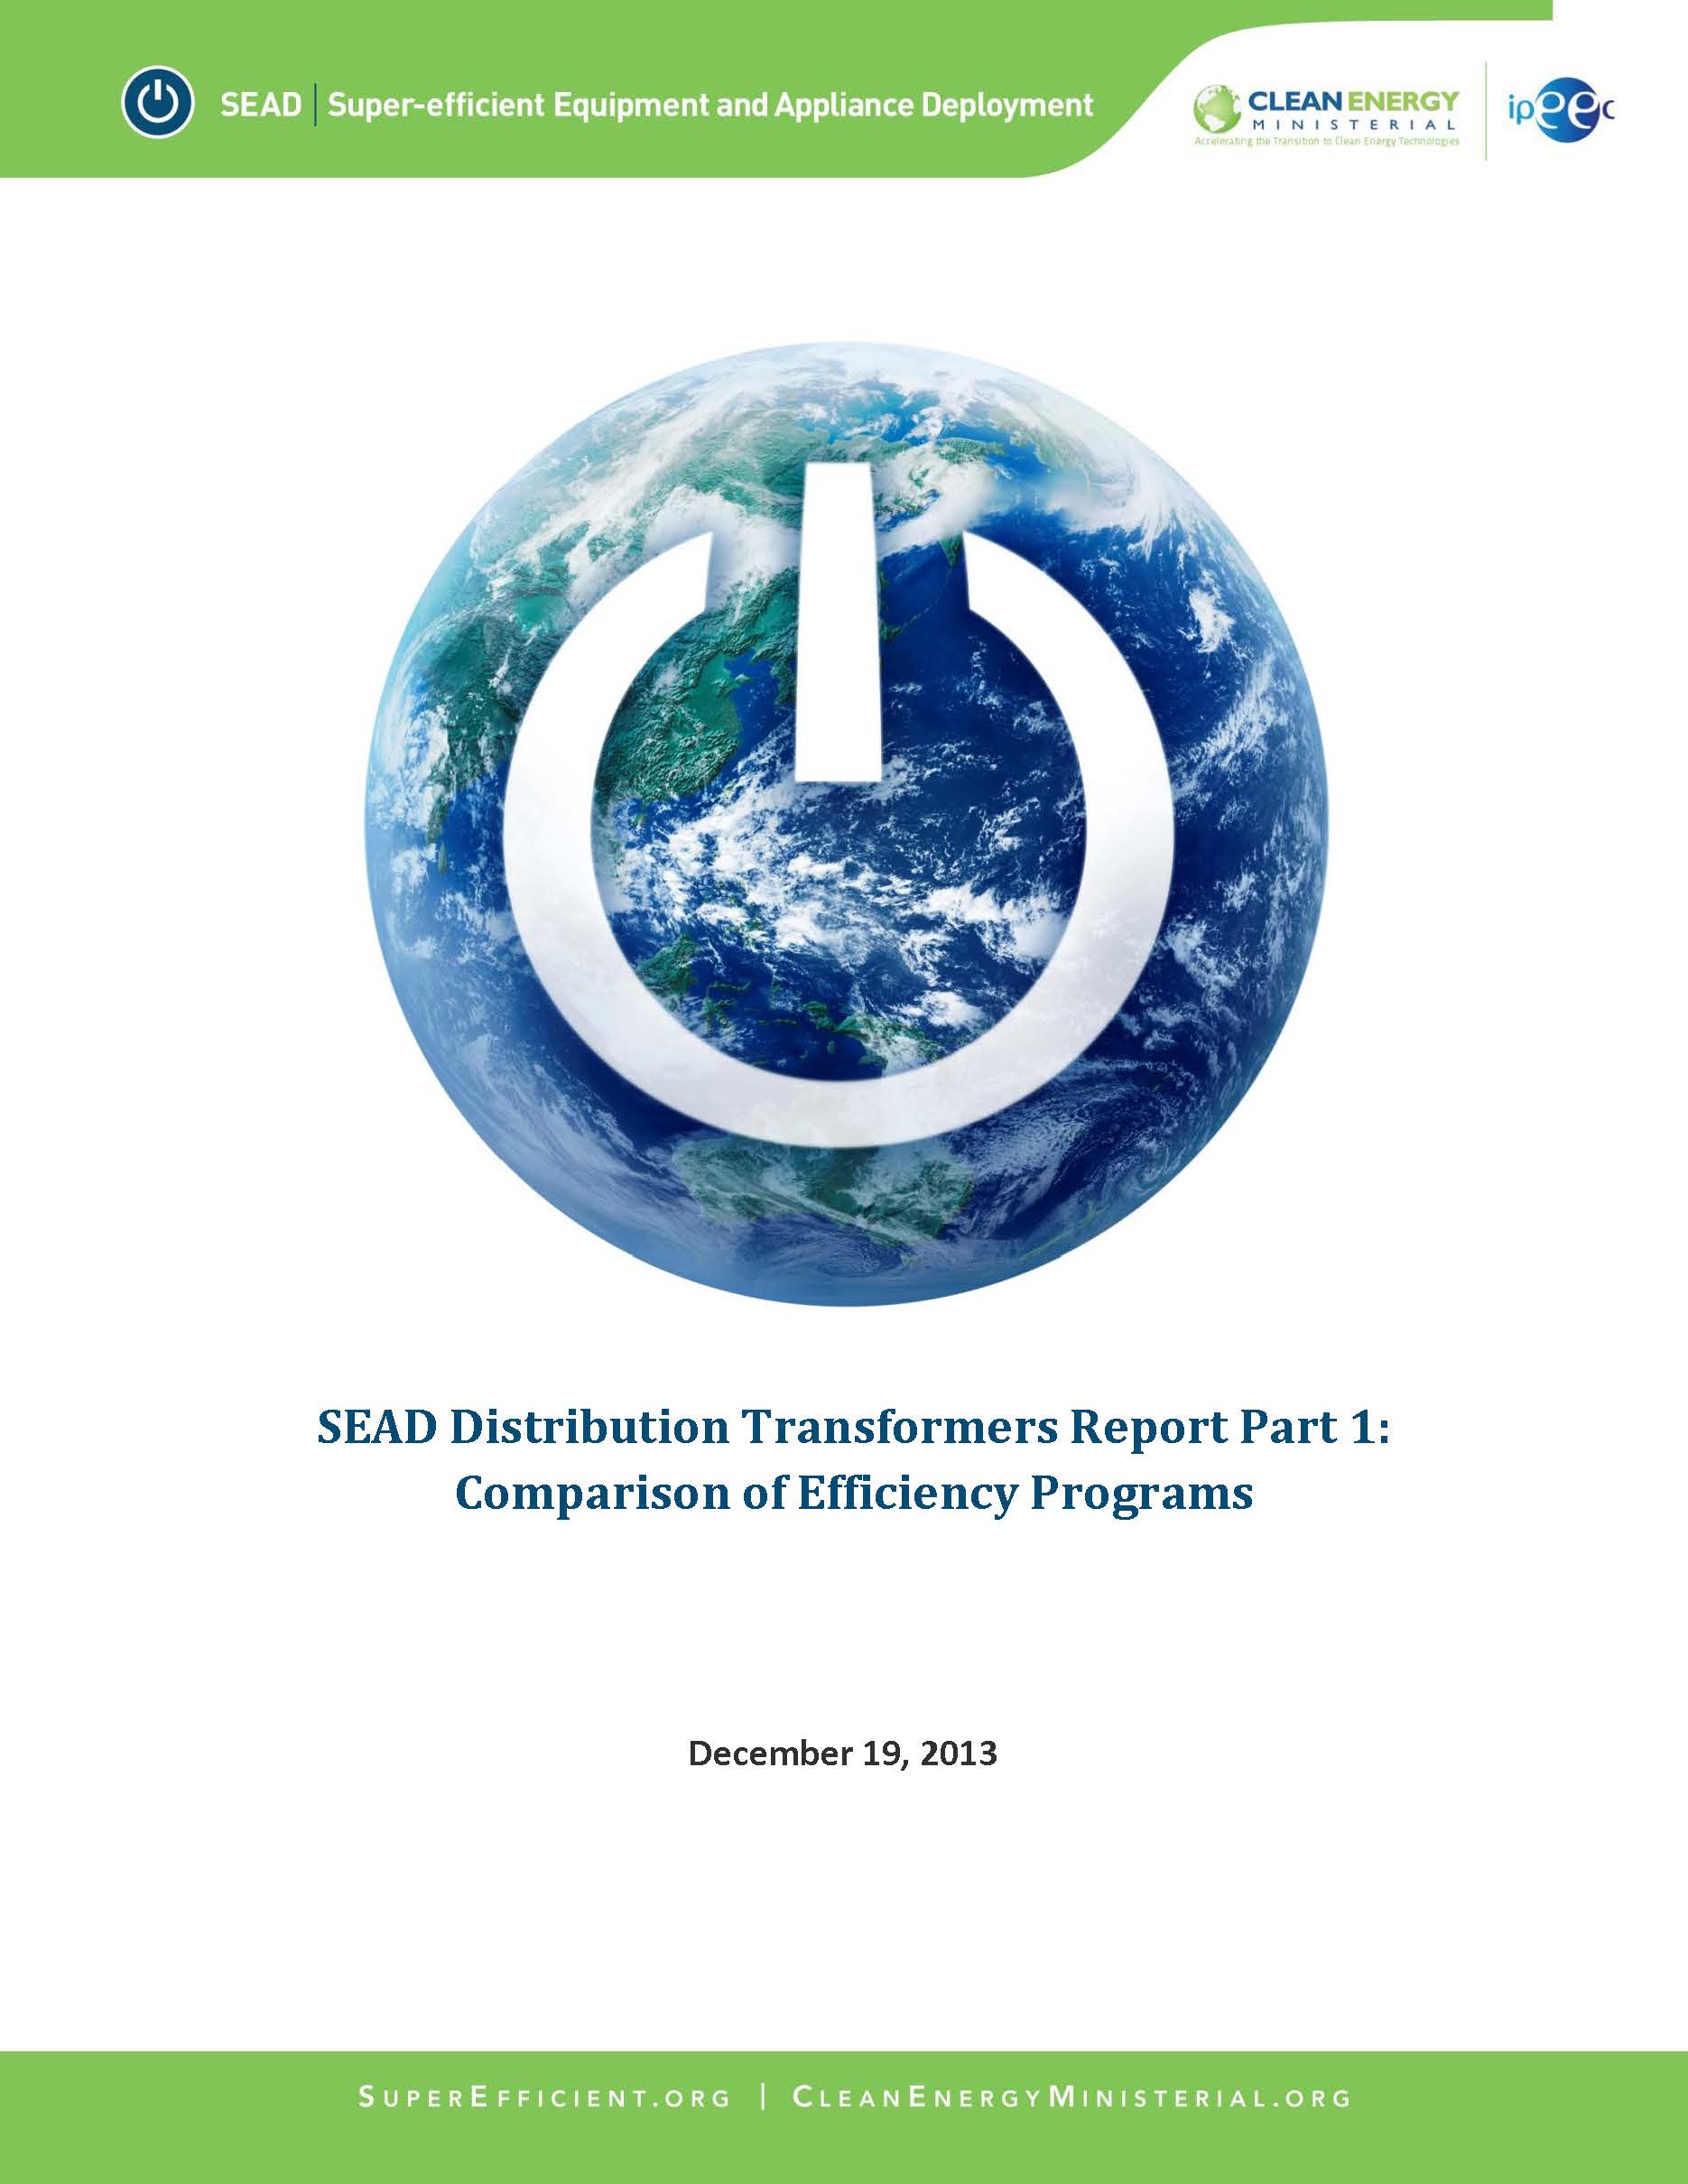 SEAD Distribution Transformer report cover